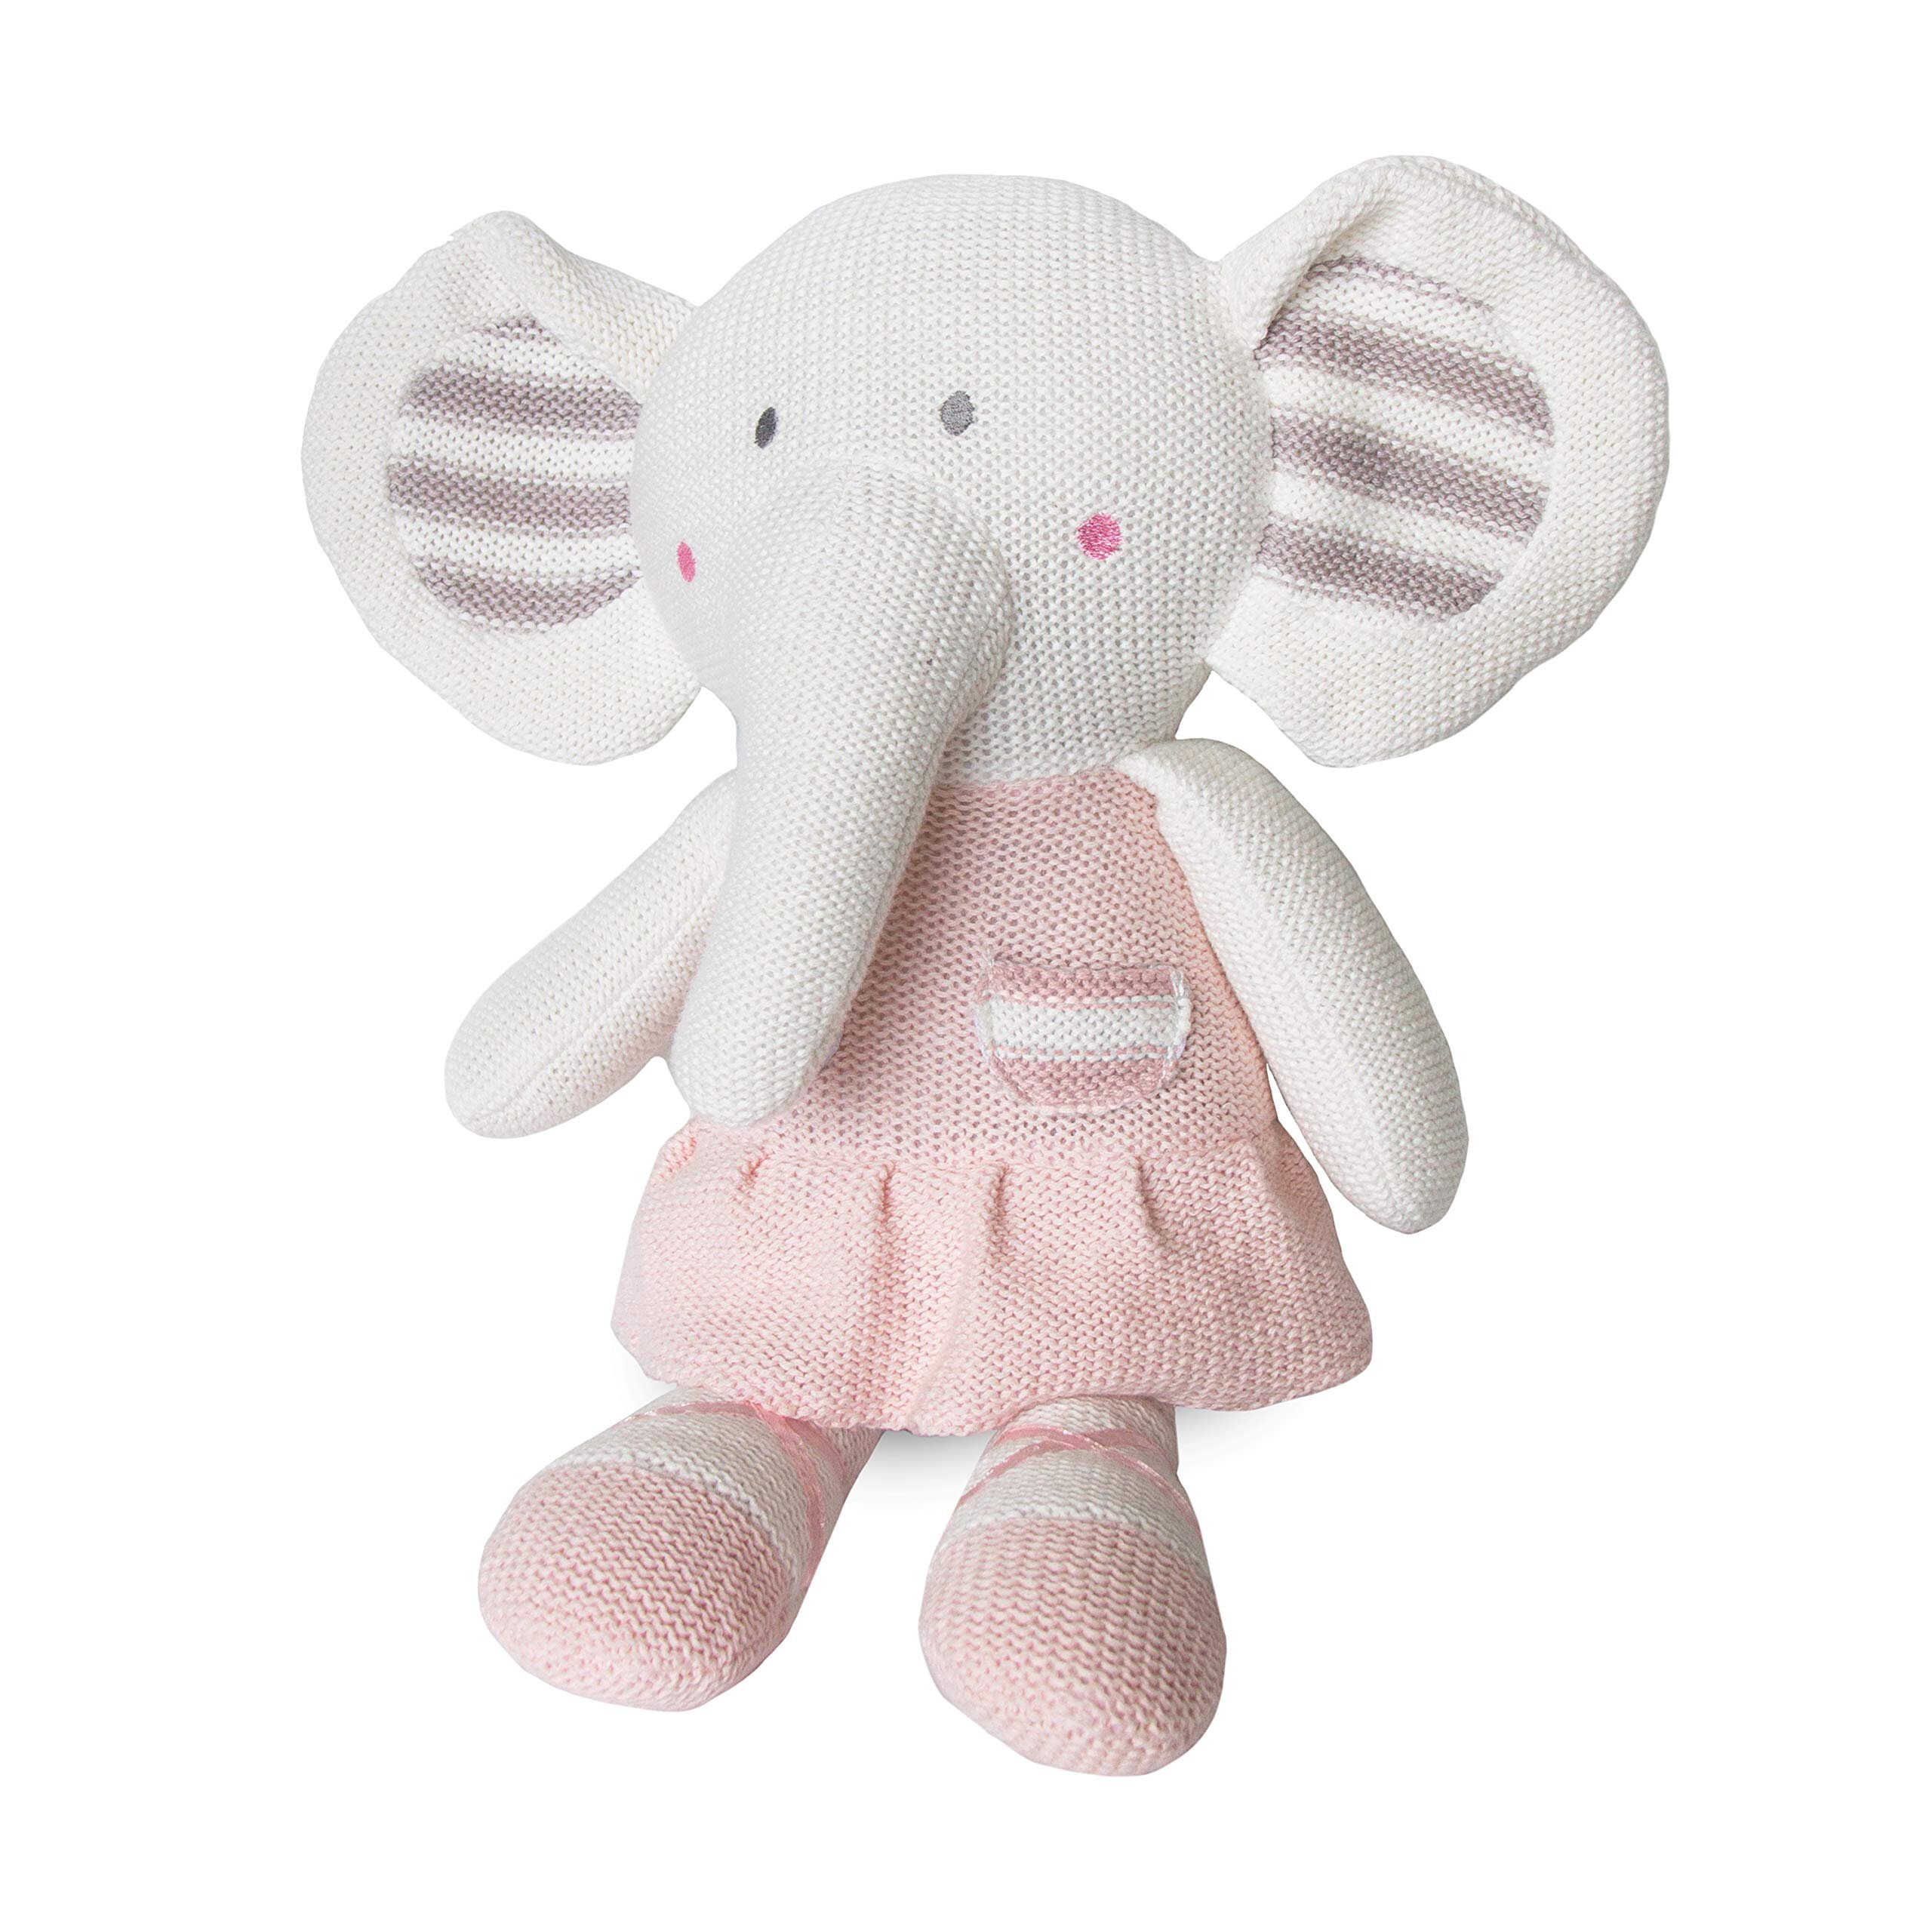 Living Textiles Baby Knit Plush Toy wRattle - Bella Bunny - Premium 100% cotton Super cute Soft & Fun Stuffed Animal character  for Infant,Newborn,Stu